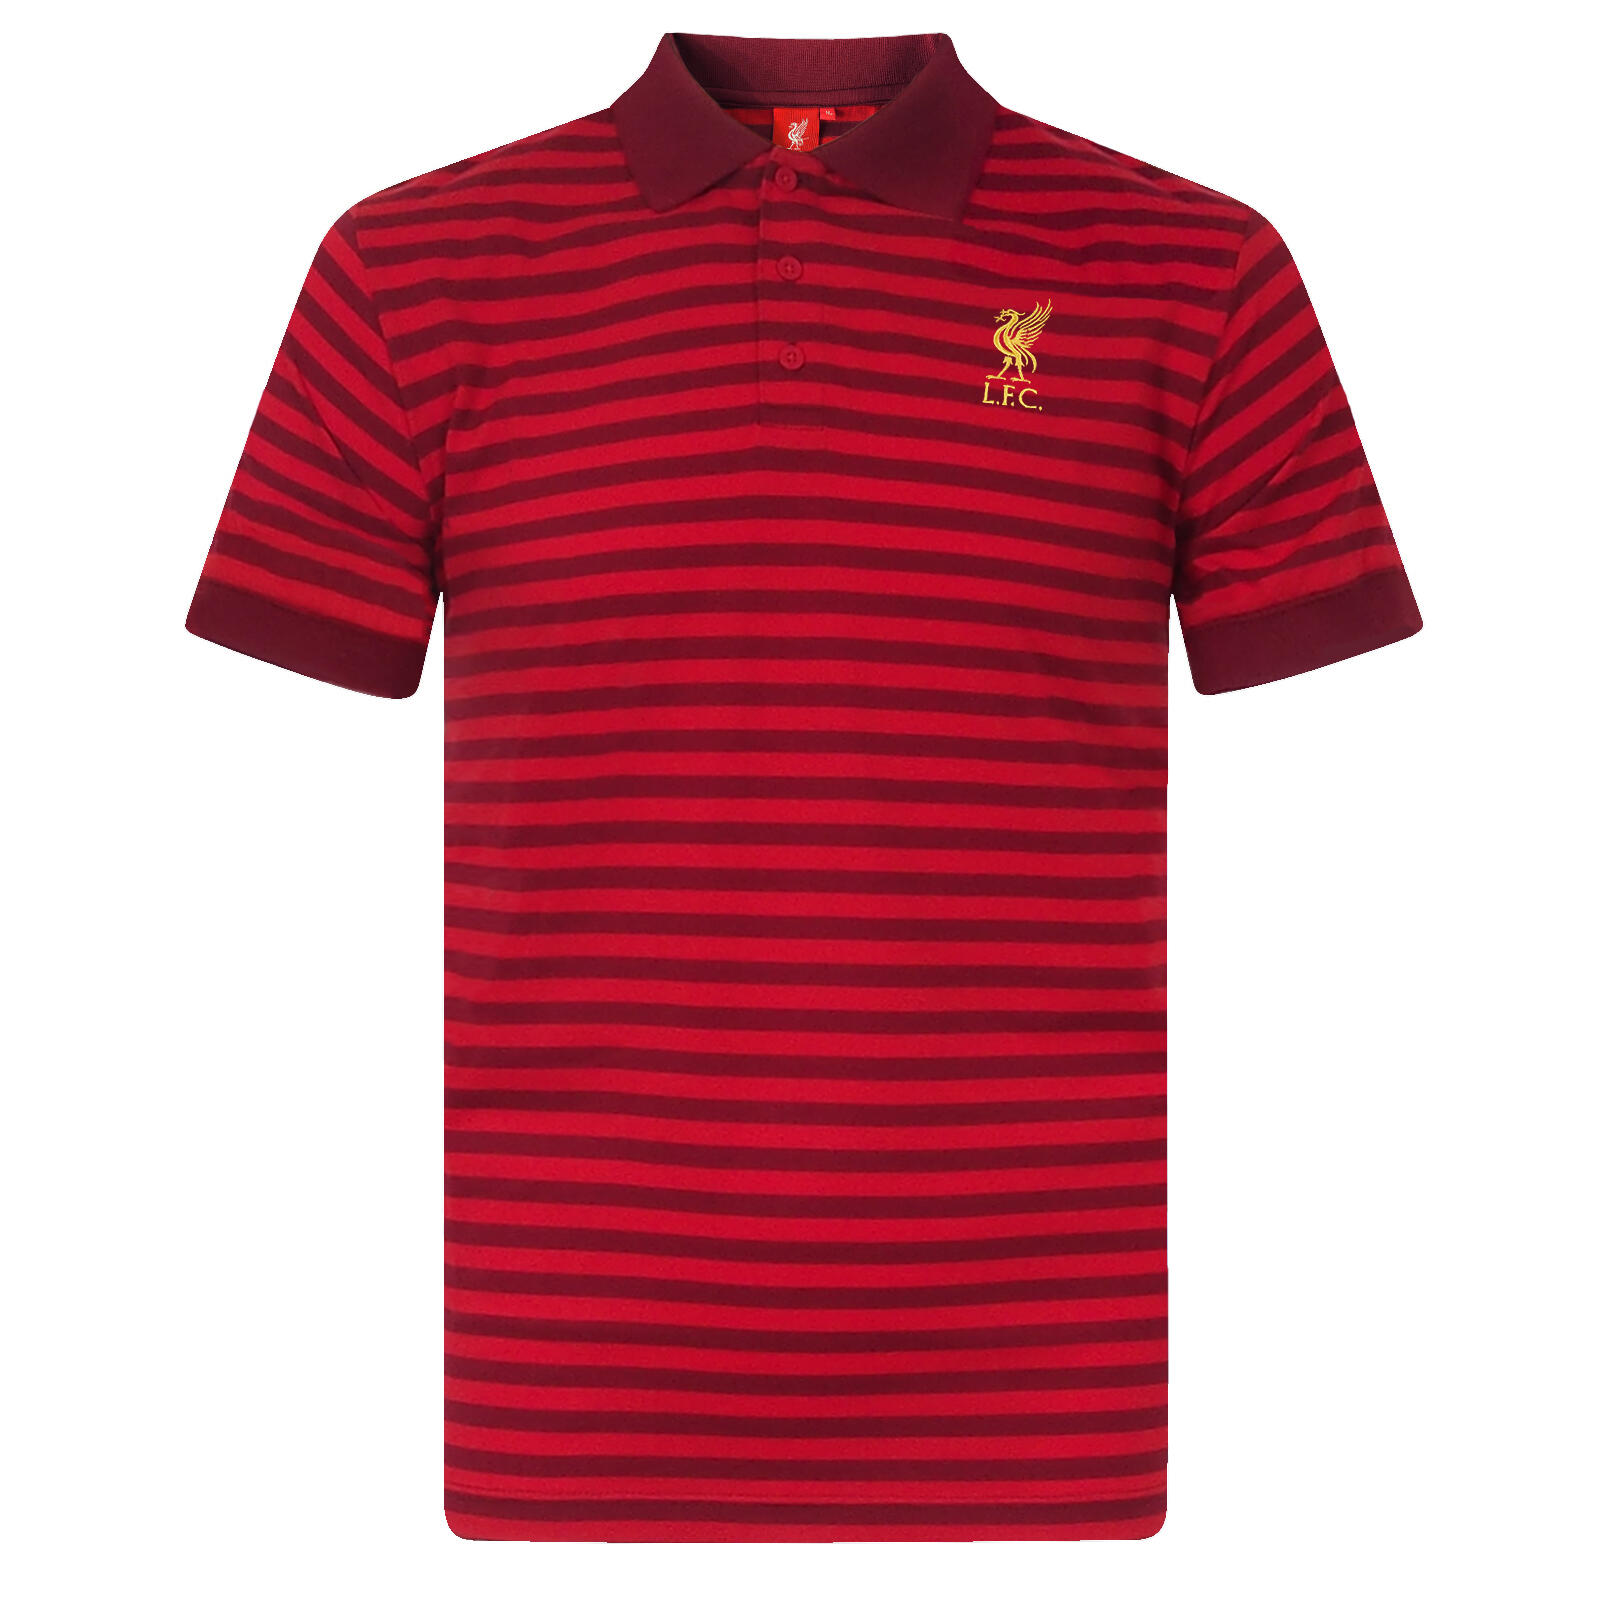 LIVERPOOL FC Liverpool FC Mens Polo Shirt Striped Marl Yarn Dye OFFICIAL Football Gift